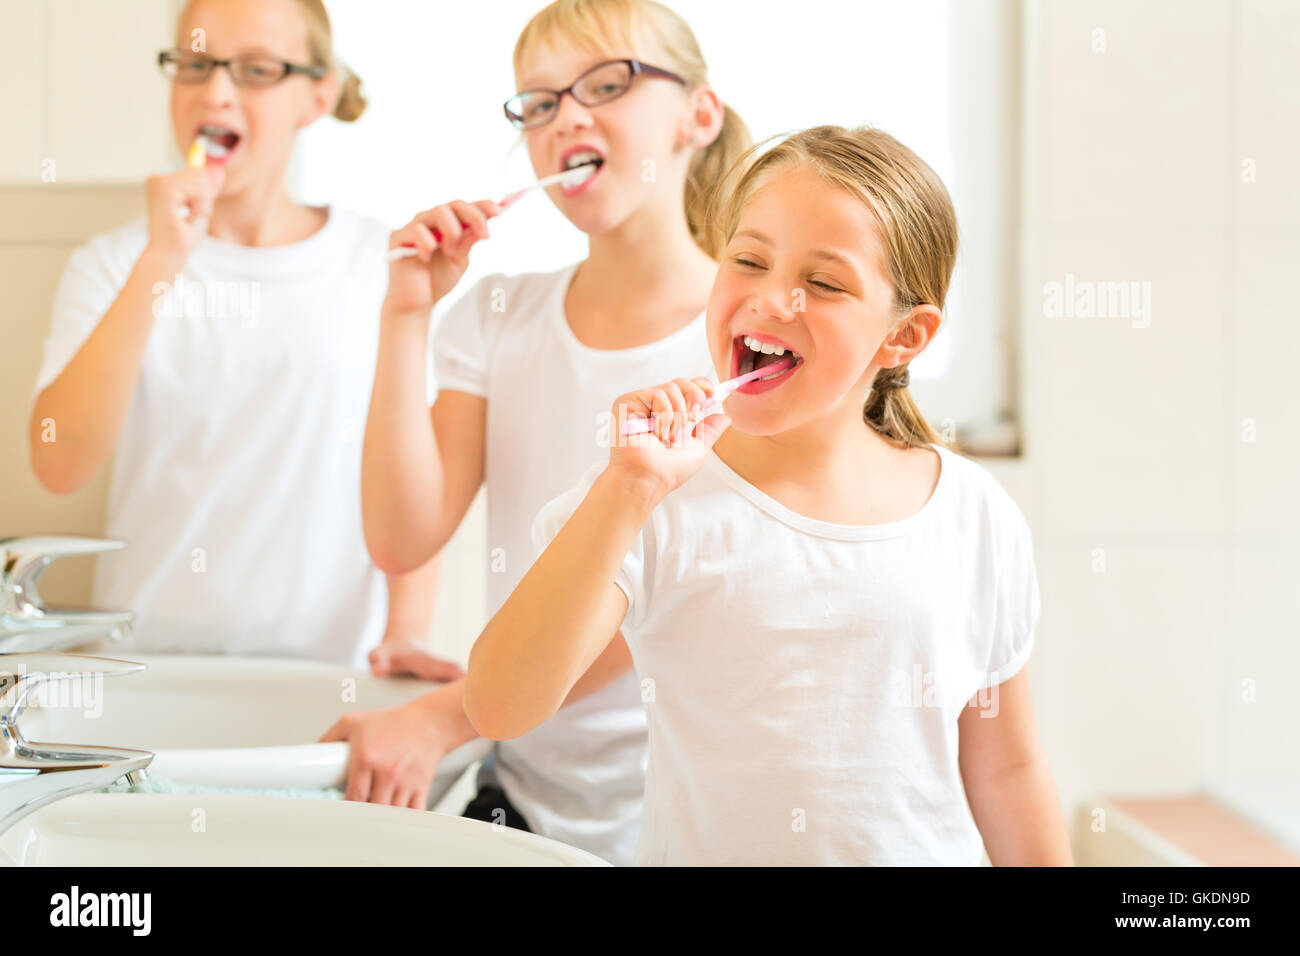 girl brushing teeth in the bathroom Stock Photo